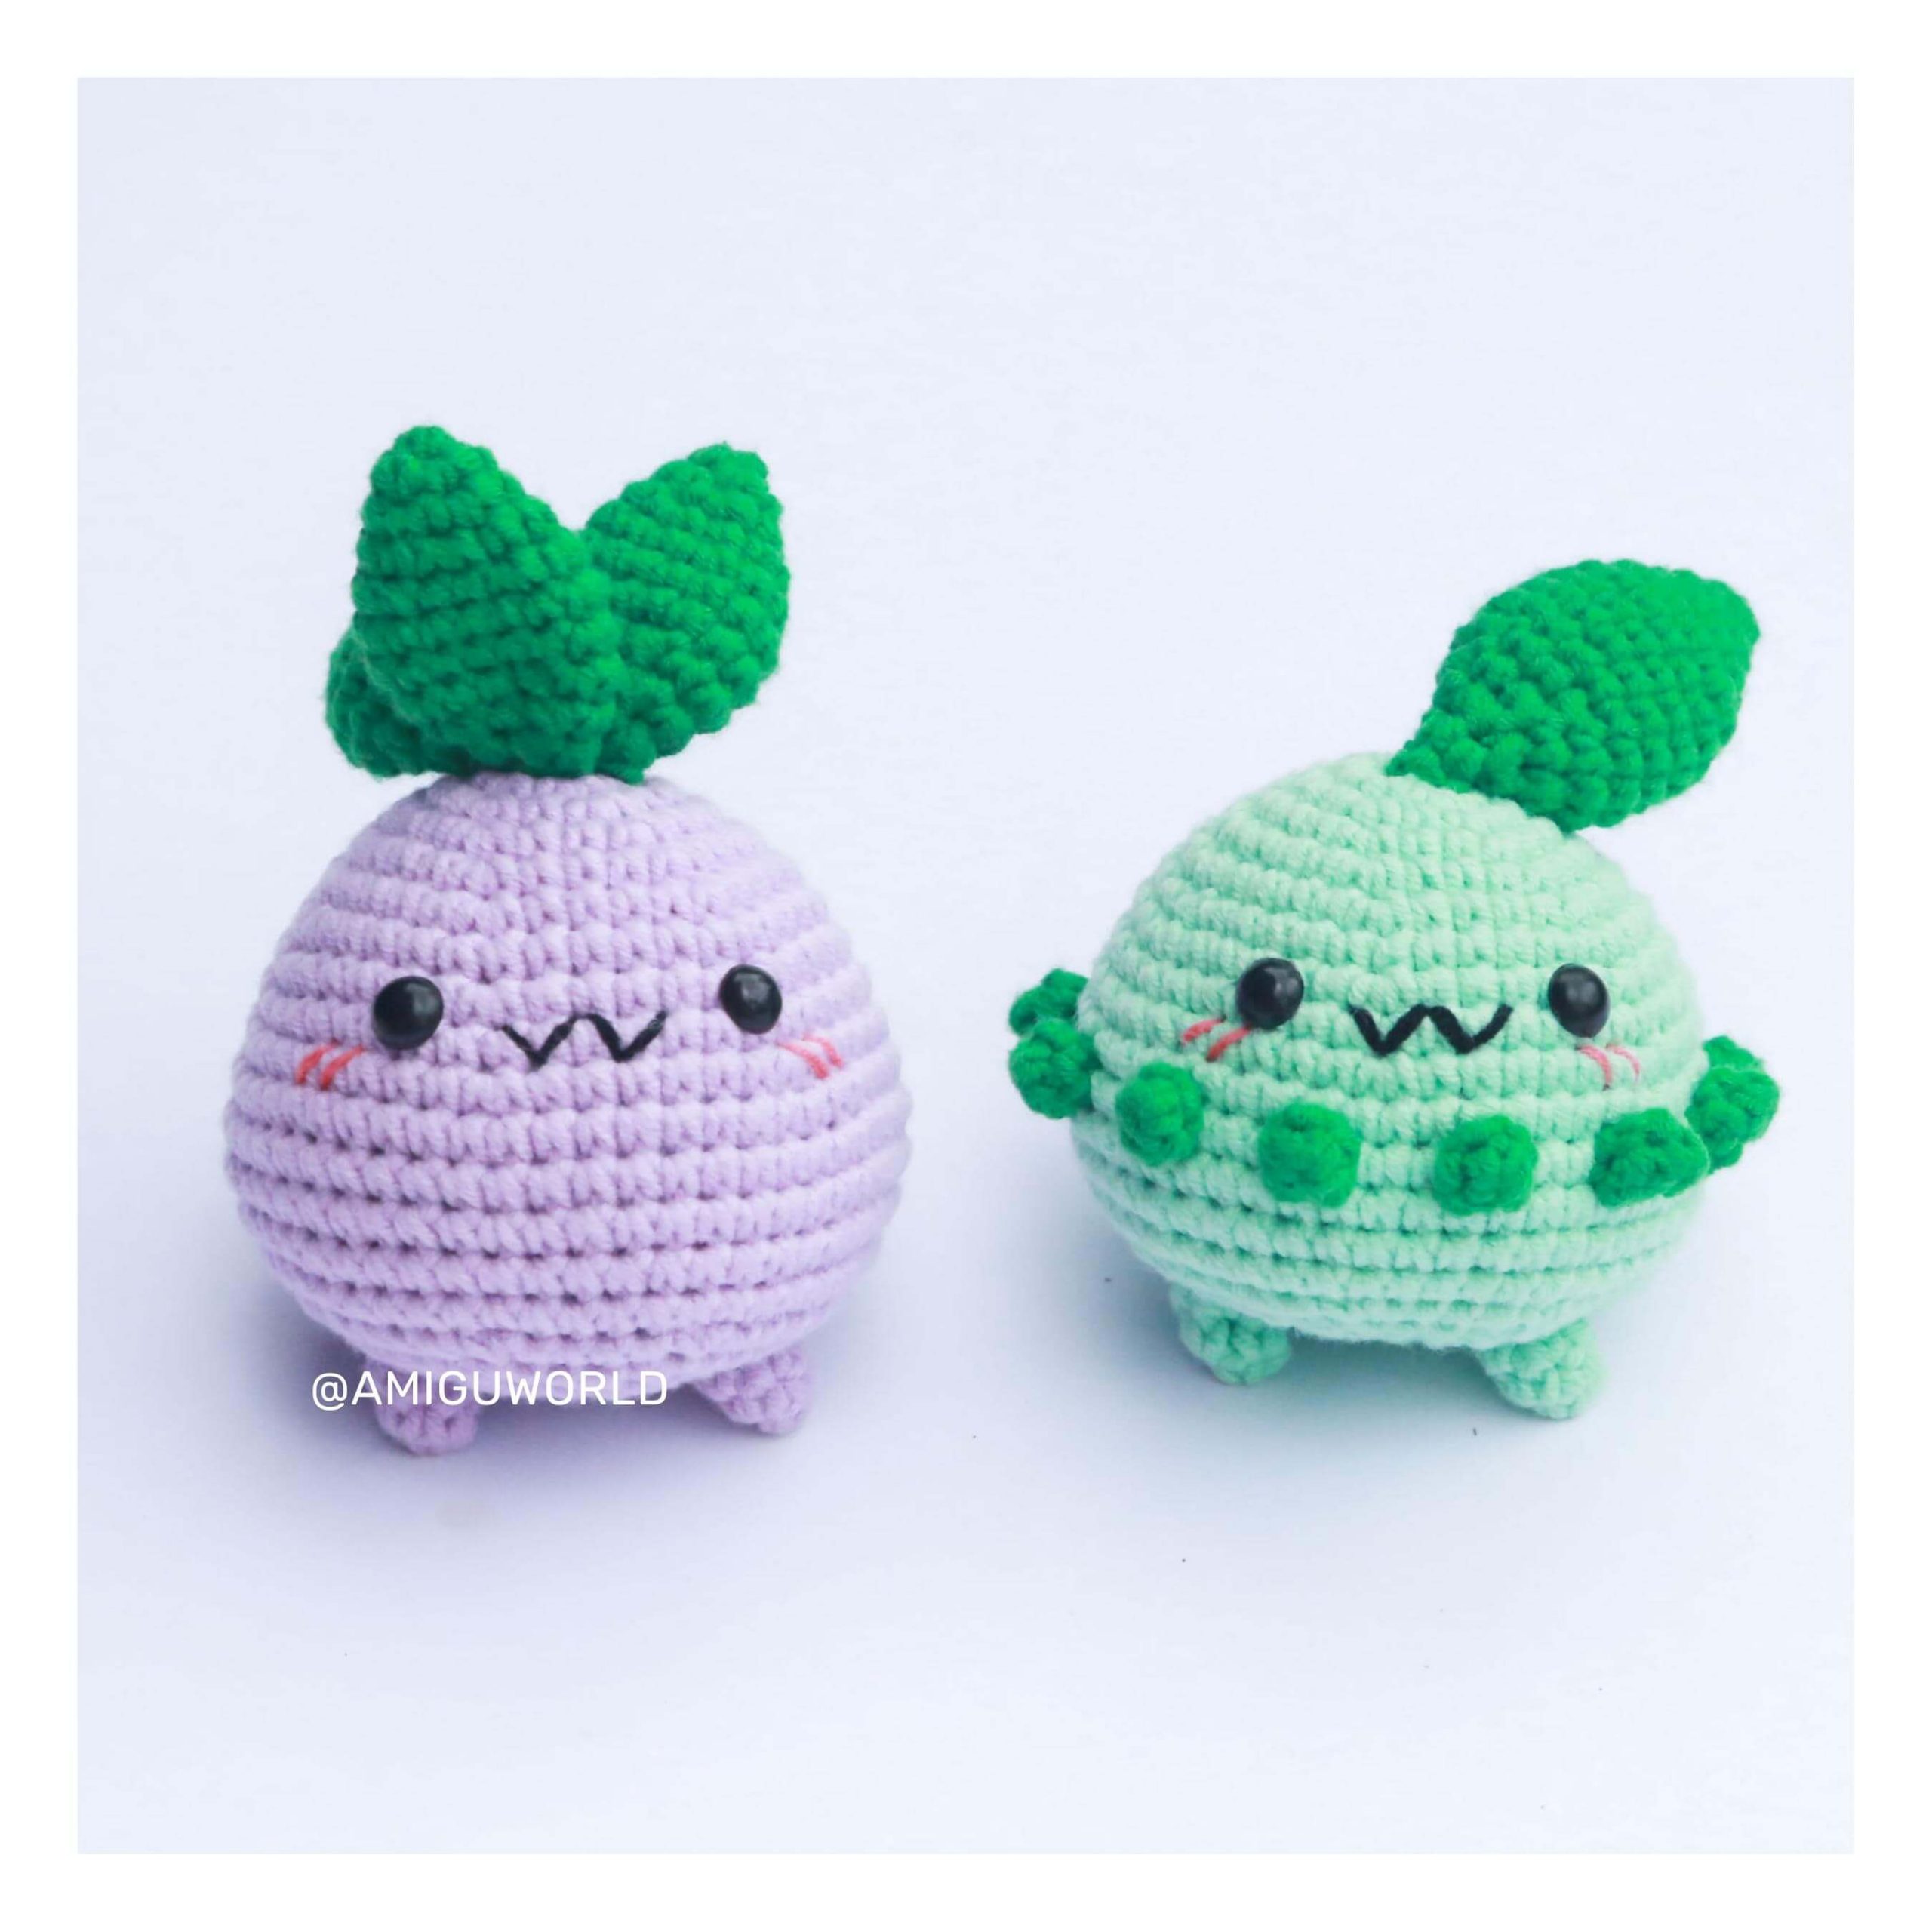 oddish-amigurumi-crochet-pattern (13)